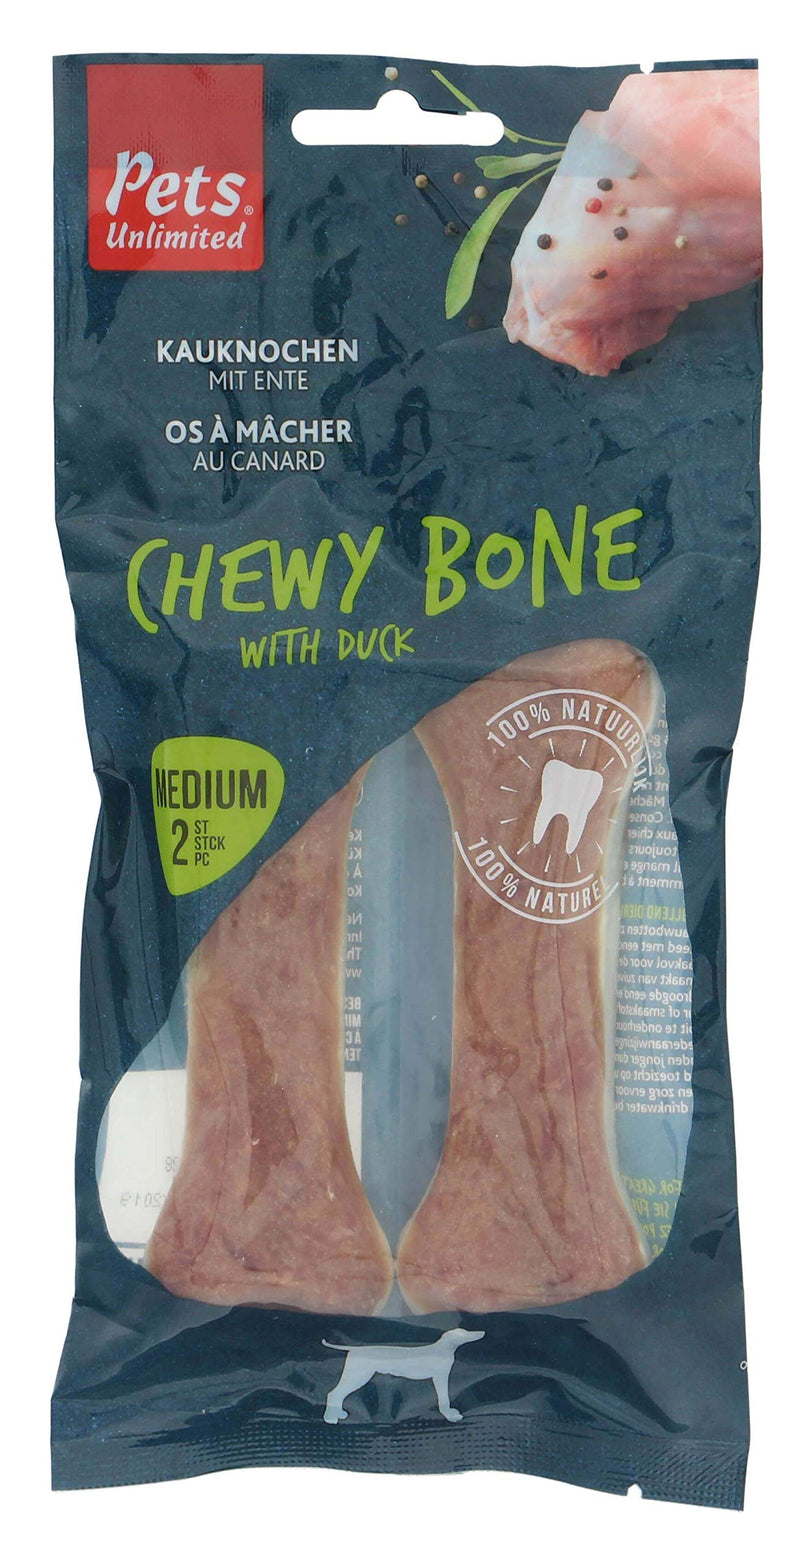 Pets Unlimited Chewy Bones with Duck, Medium, 2pcs transparent - PawsPlanet Australia